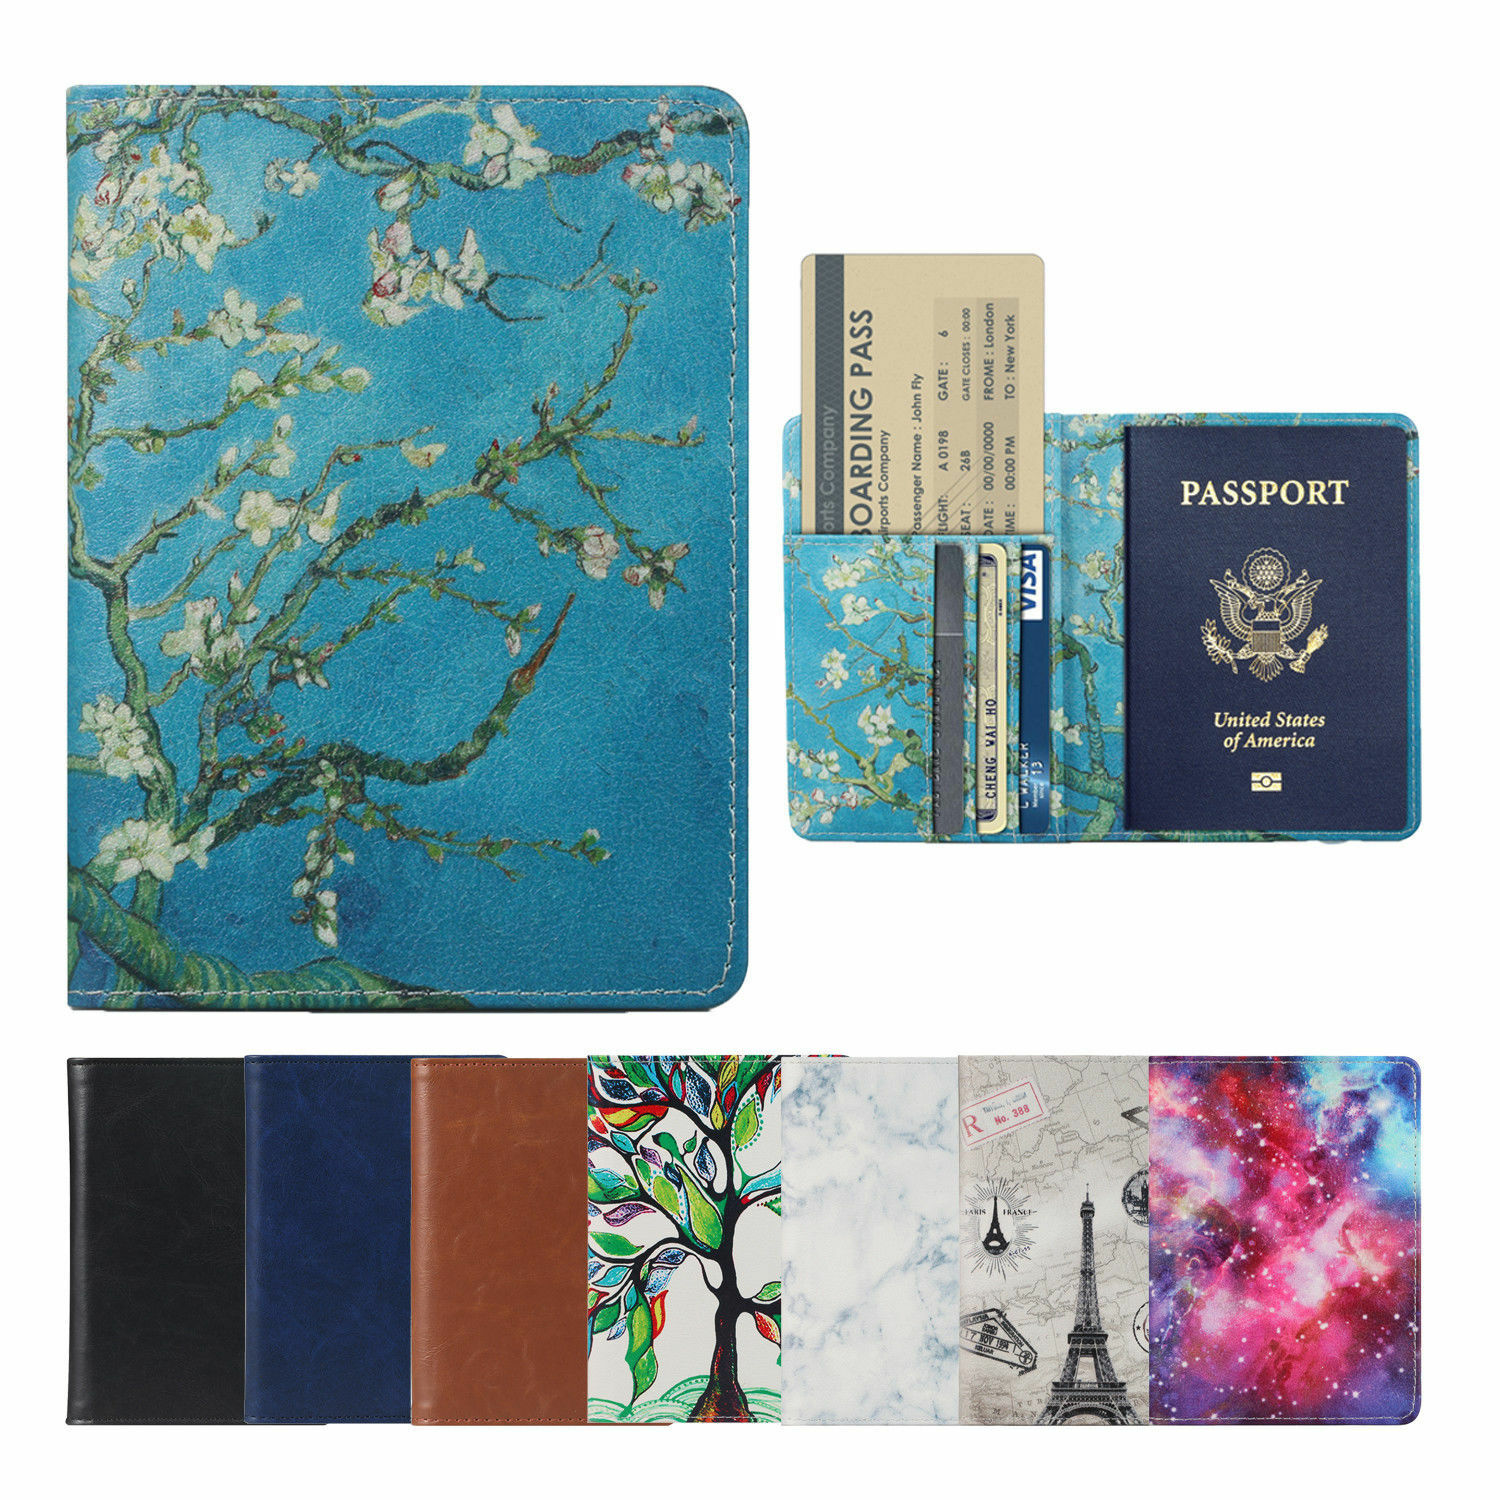 Passport Holder Travel Wallet Rfid Blocking Case Cover - Holds Passport / Card